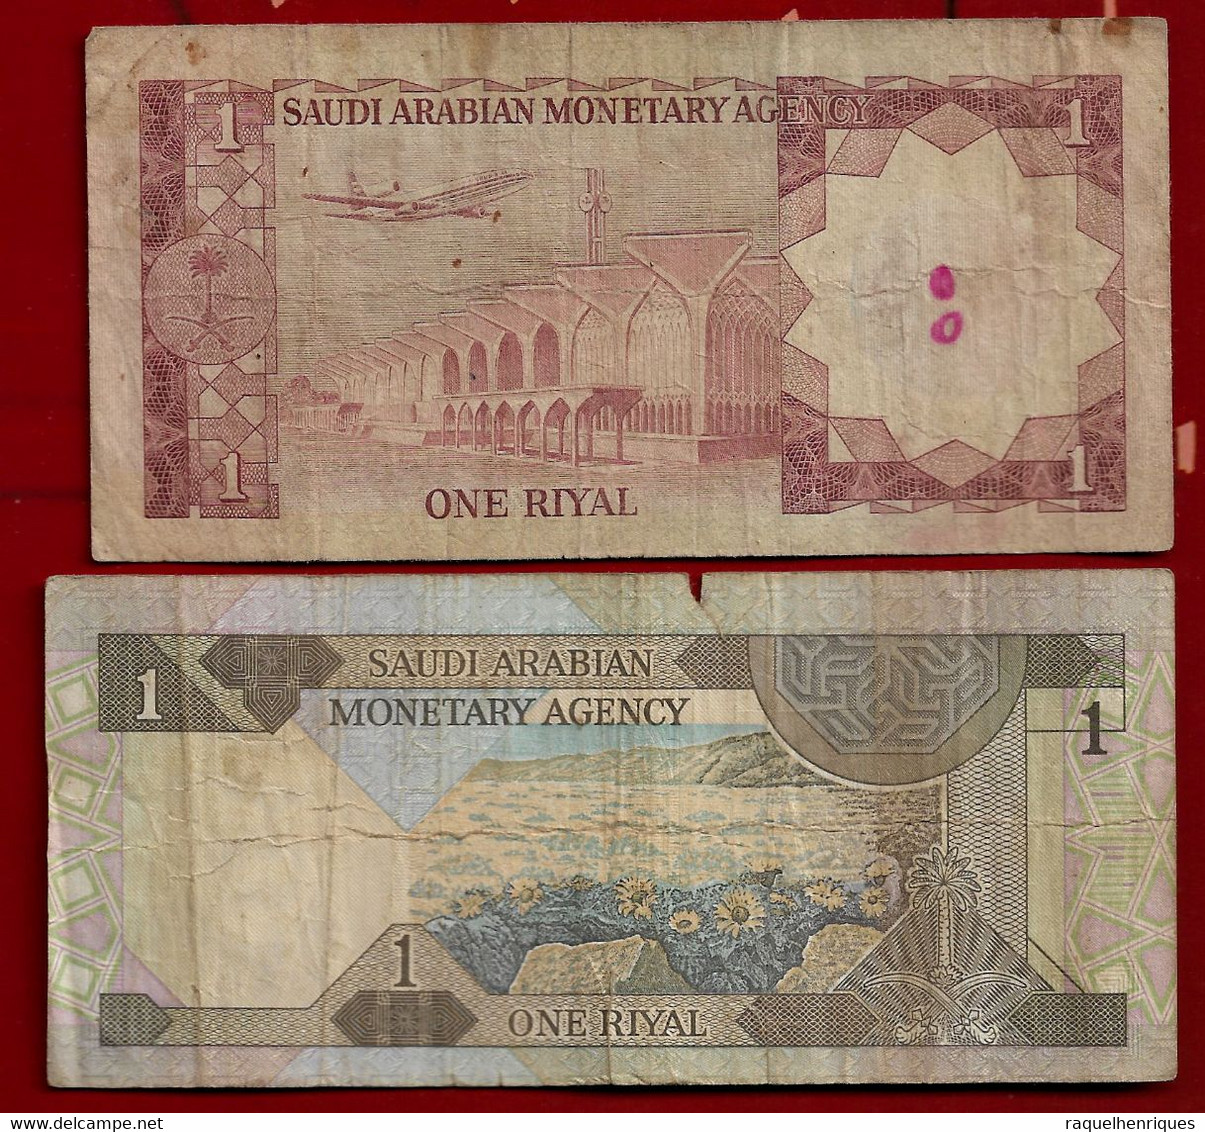 SAUDI ARABIA BANKNOTE - 2 NOTES 1 RIYAL (1984) - (1977) P#21d-16 F (NT#03) - Arabia Saudita